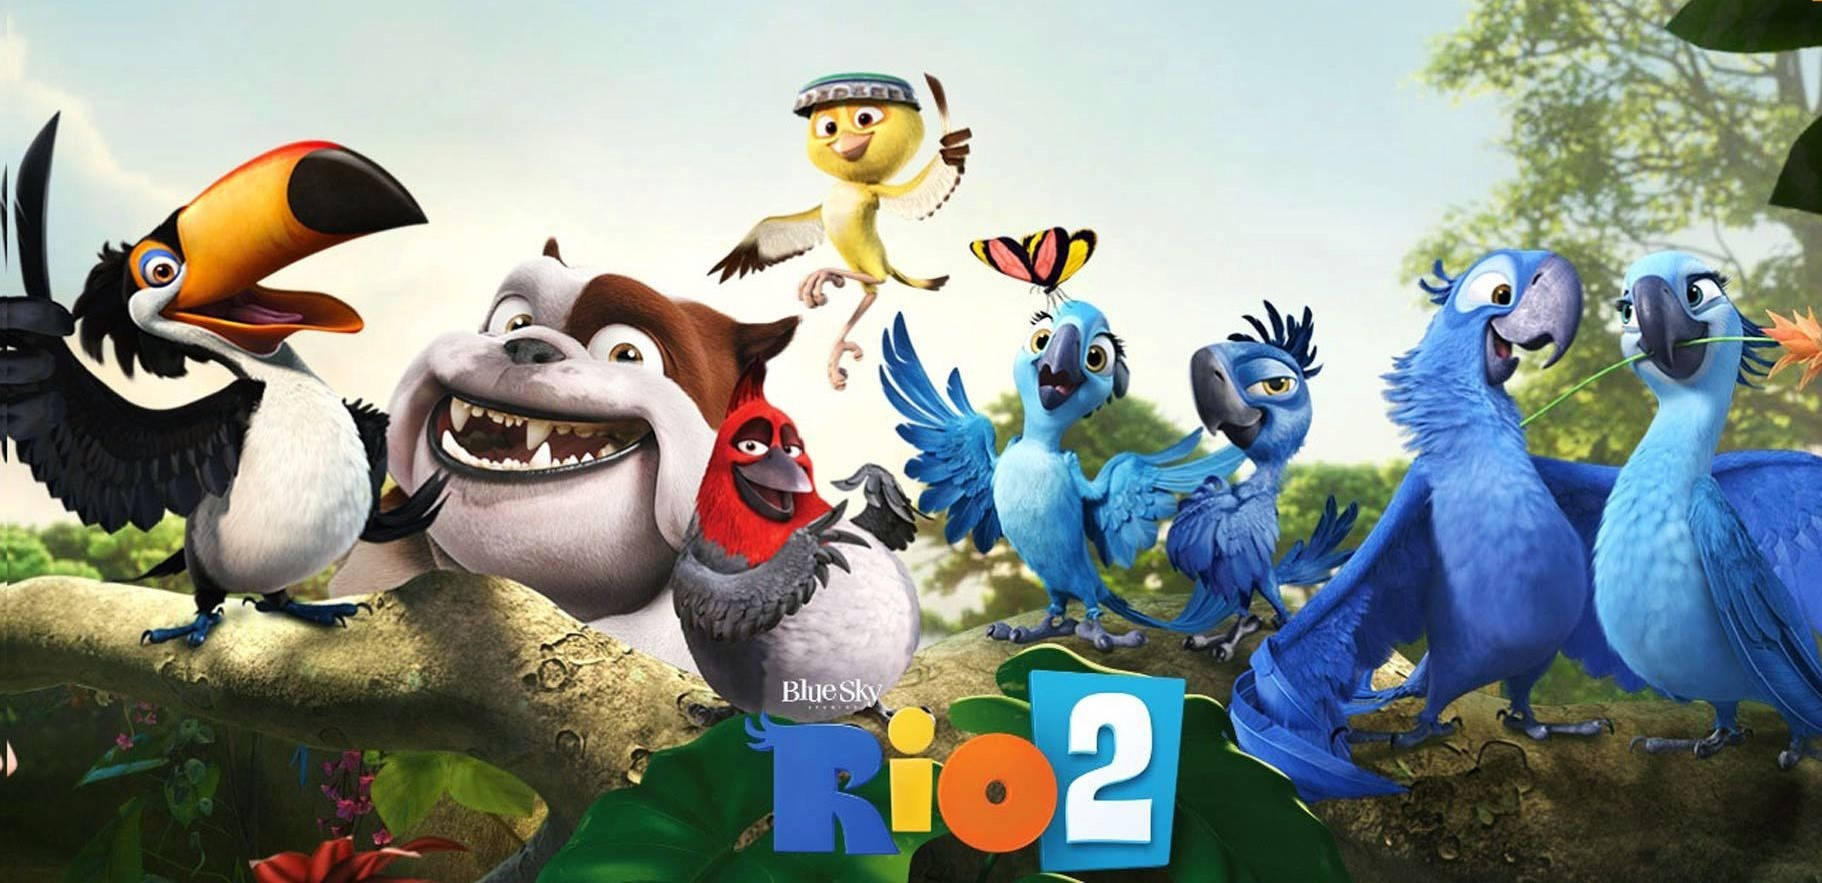 Rio 2 Characters And Logo Wallpaper